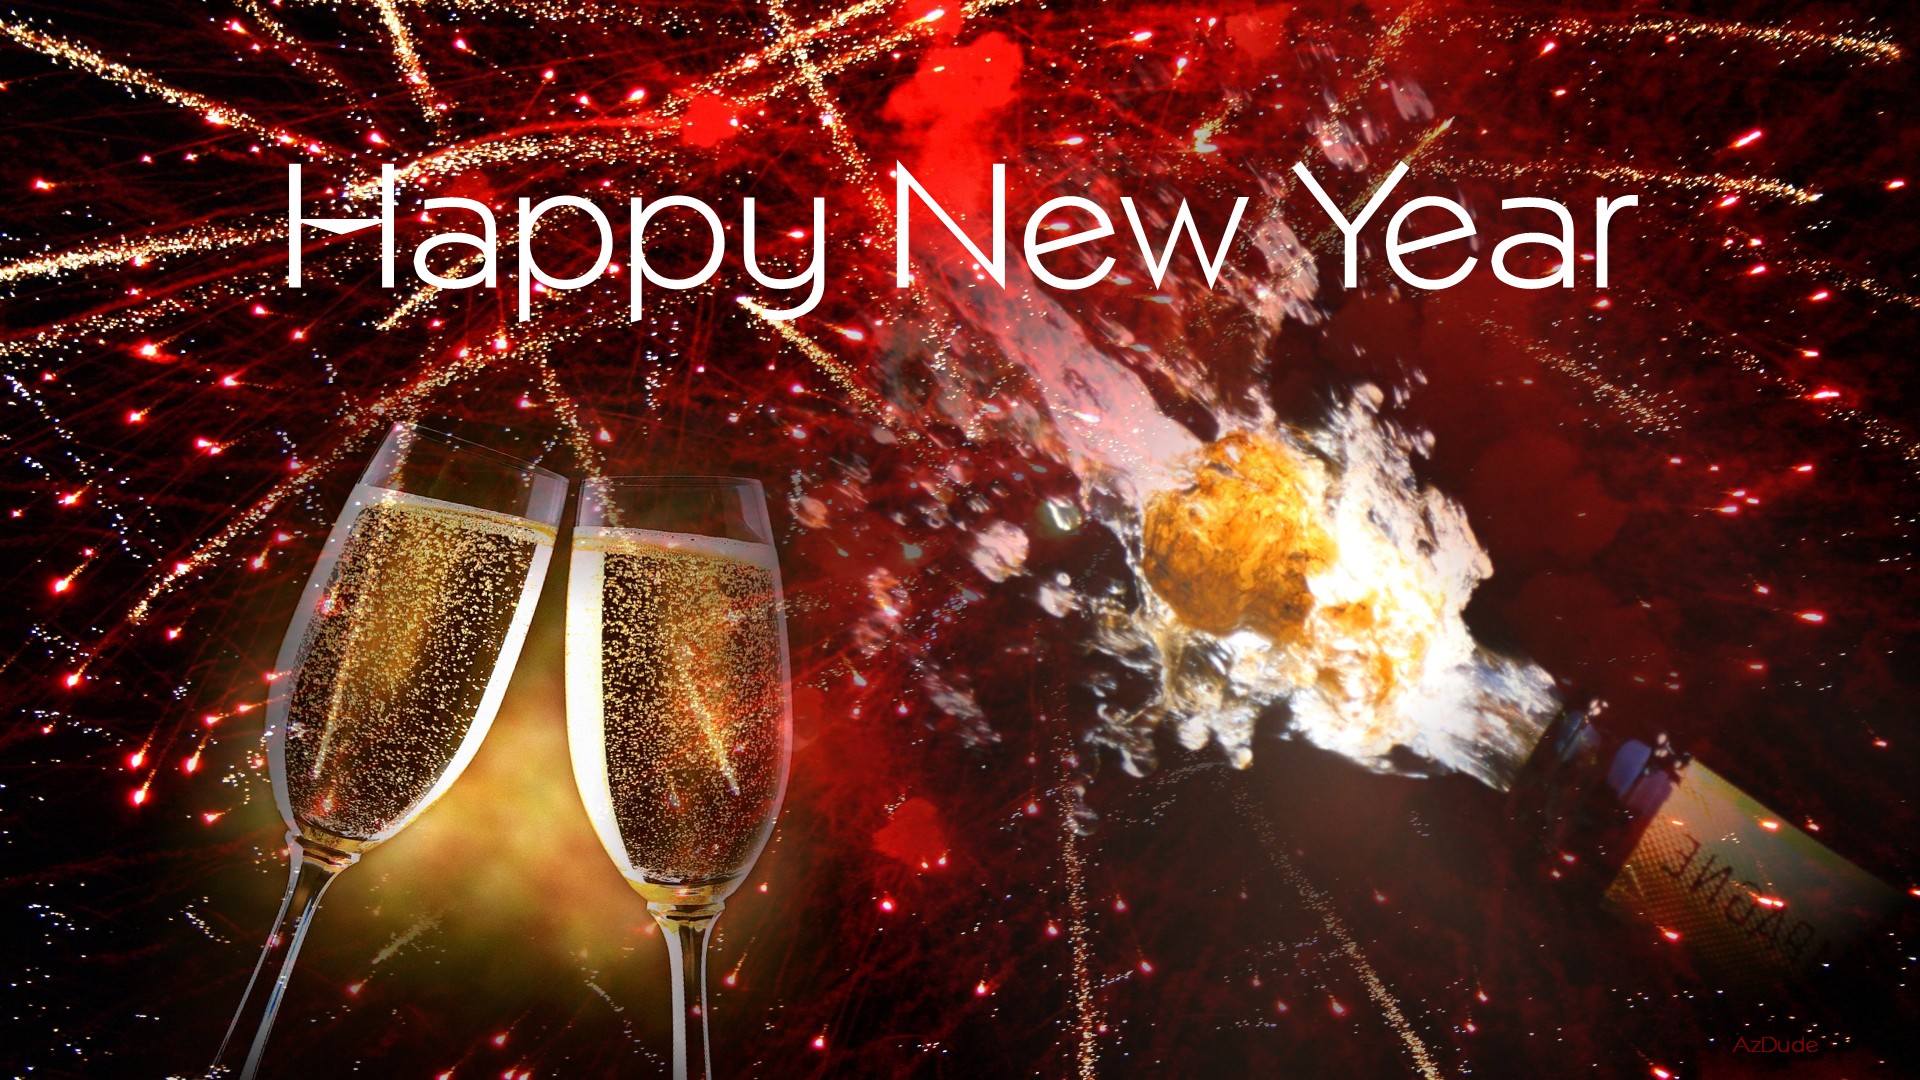 Happy-New-Year-Greetings-Images1.jpg